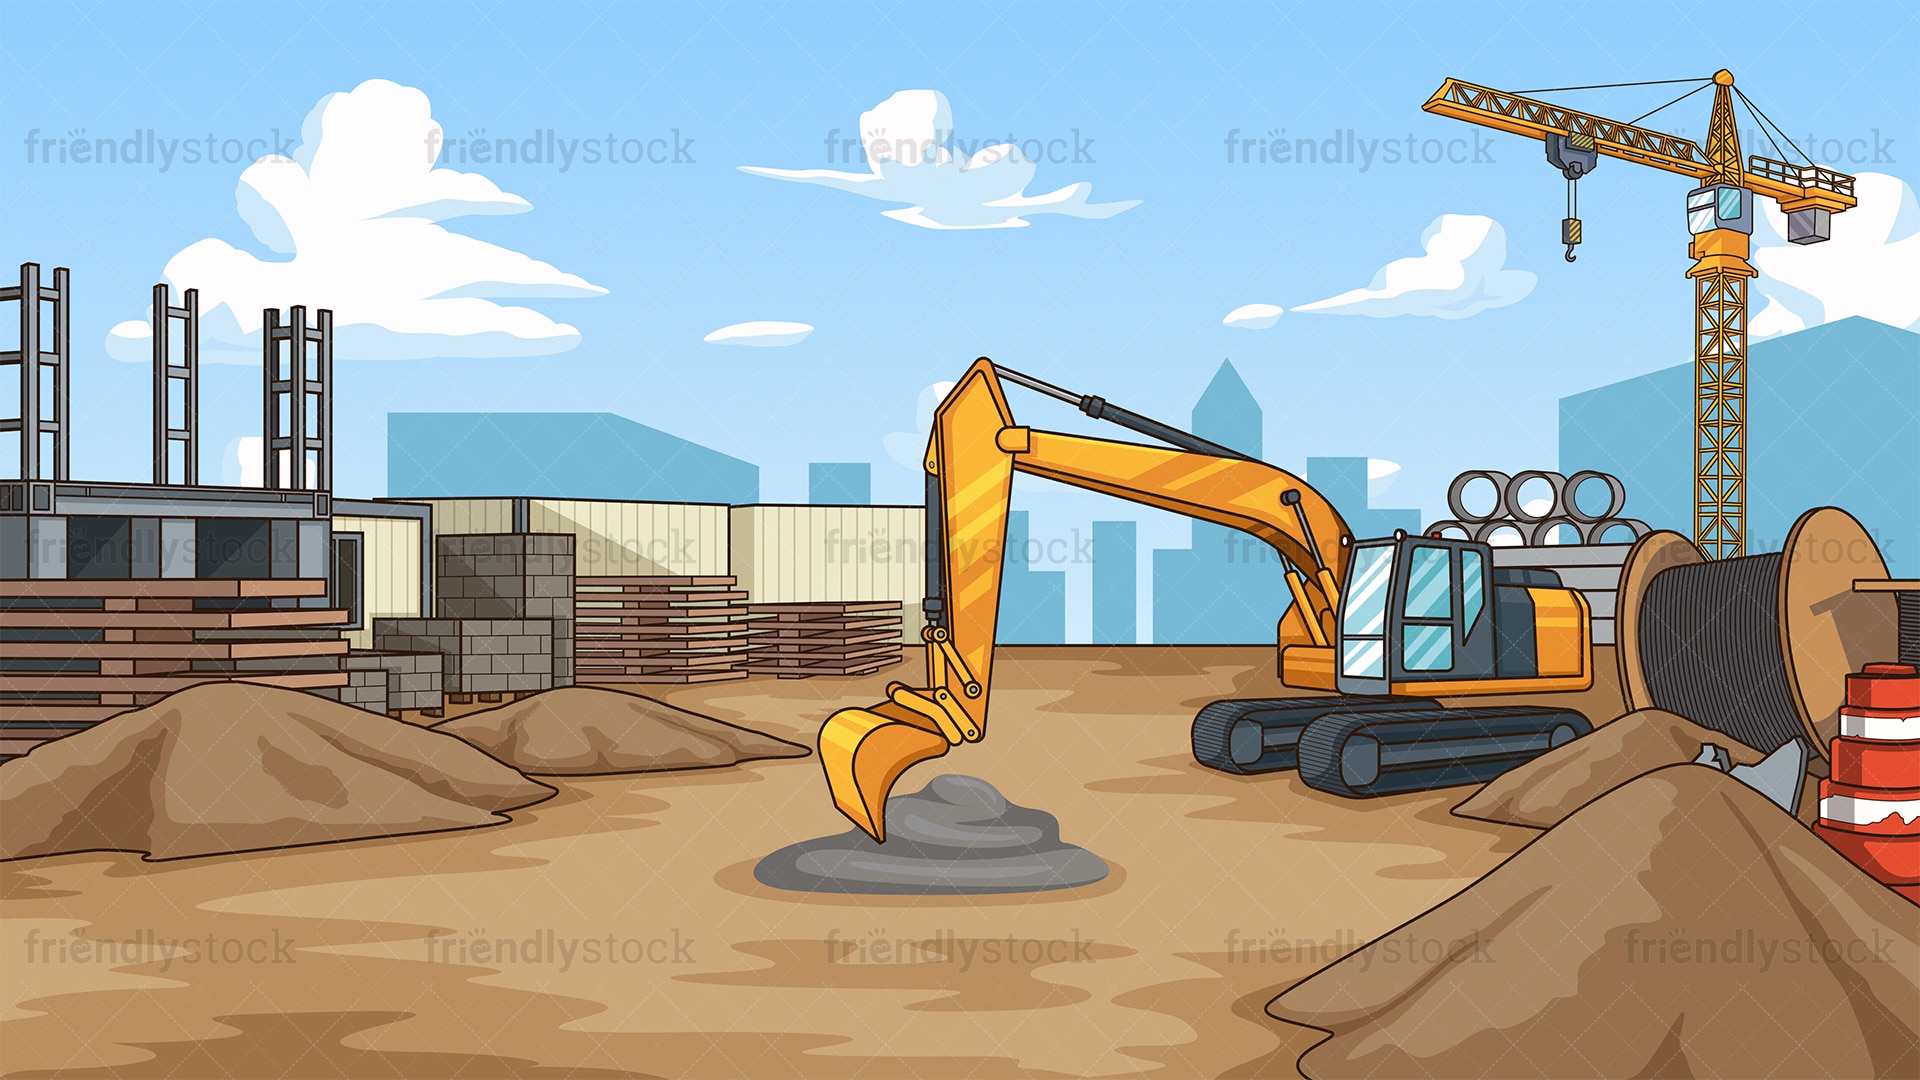 Construction Site Background Cartoon Vector Clipart - FriendlyStock